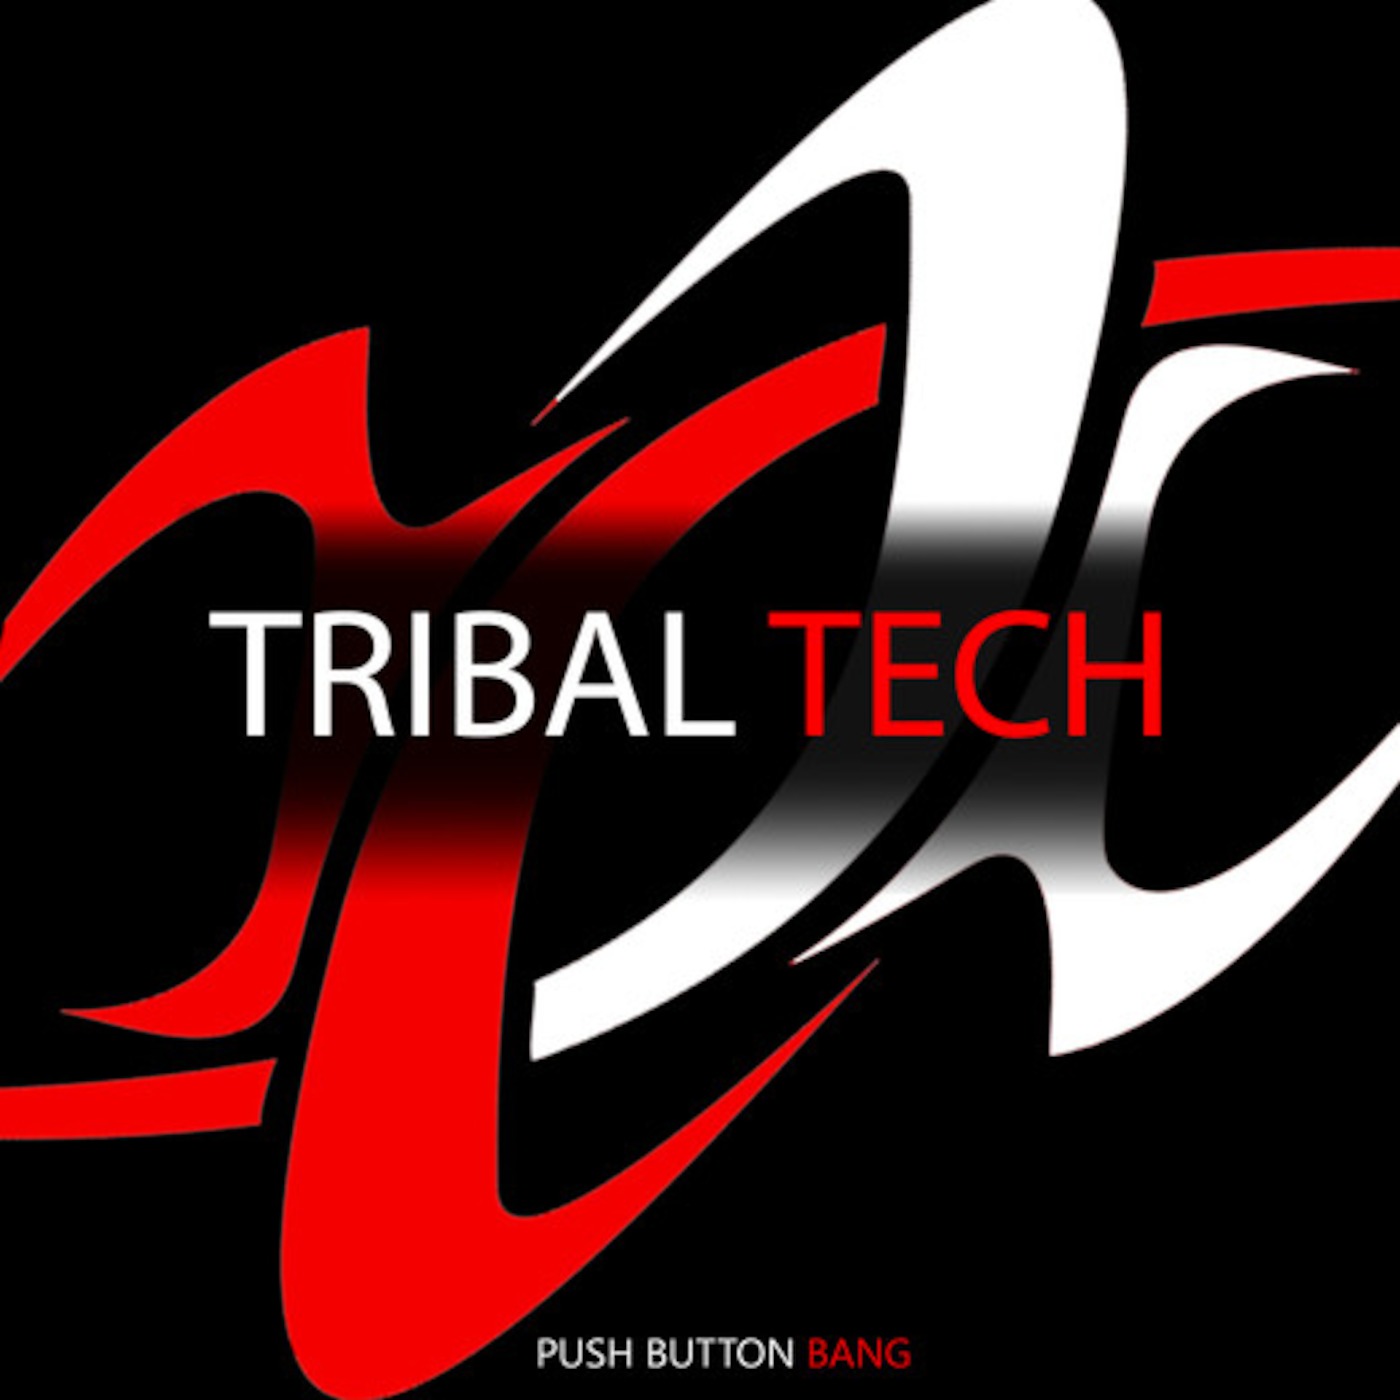 Tribal Tech Rocket Science Review